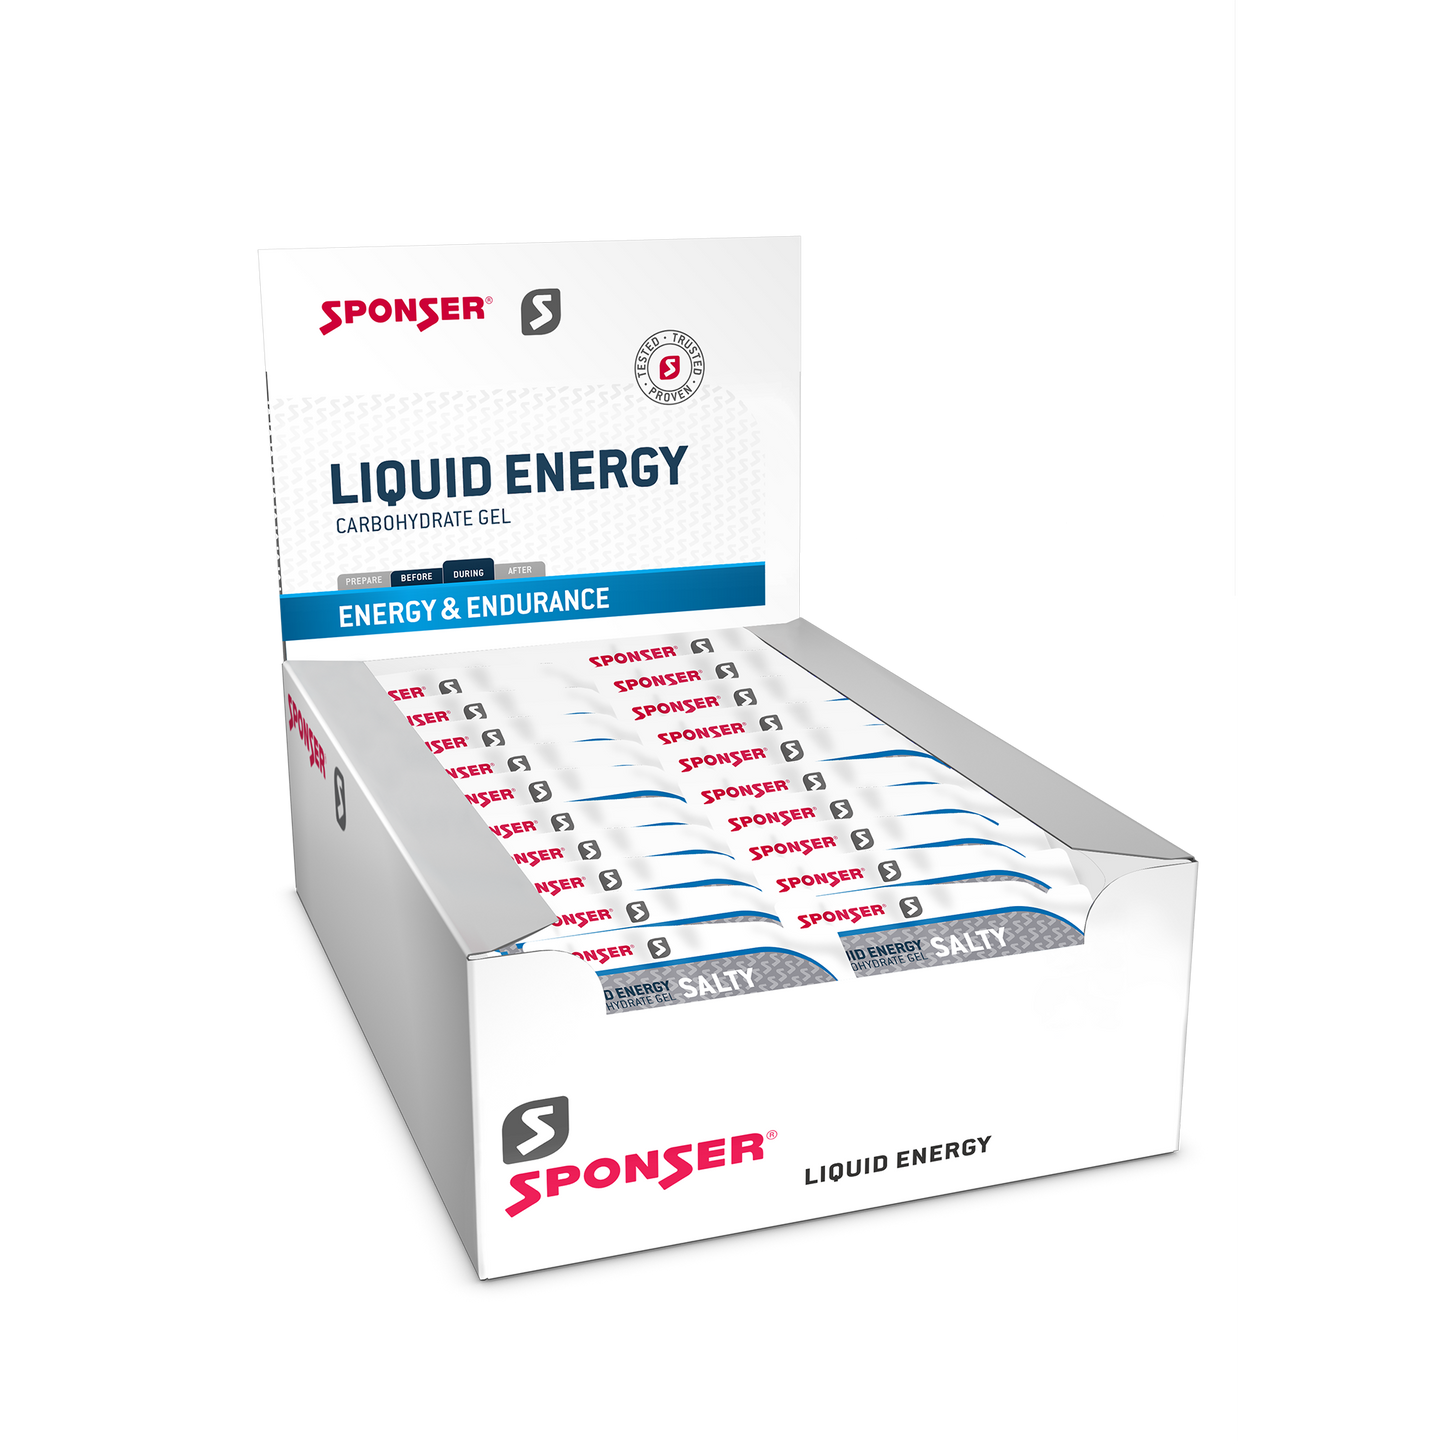 SPONSER LIQUID ENERGY Gels